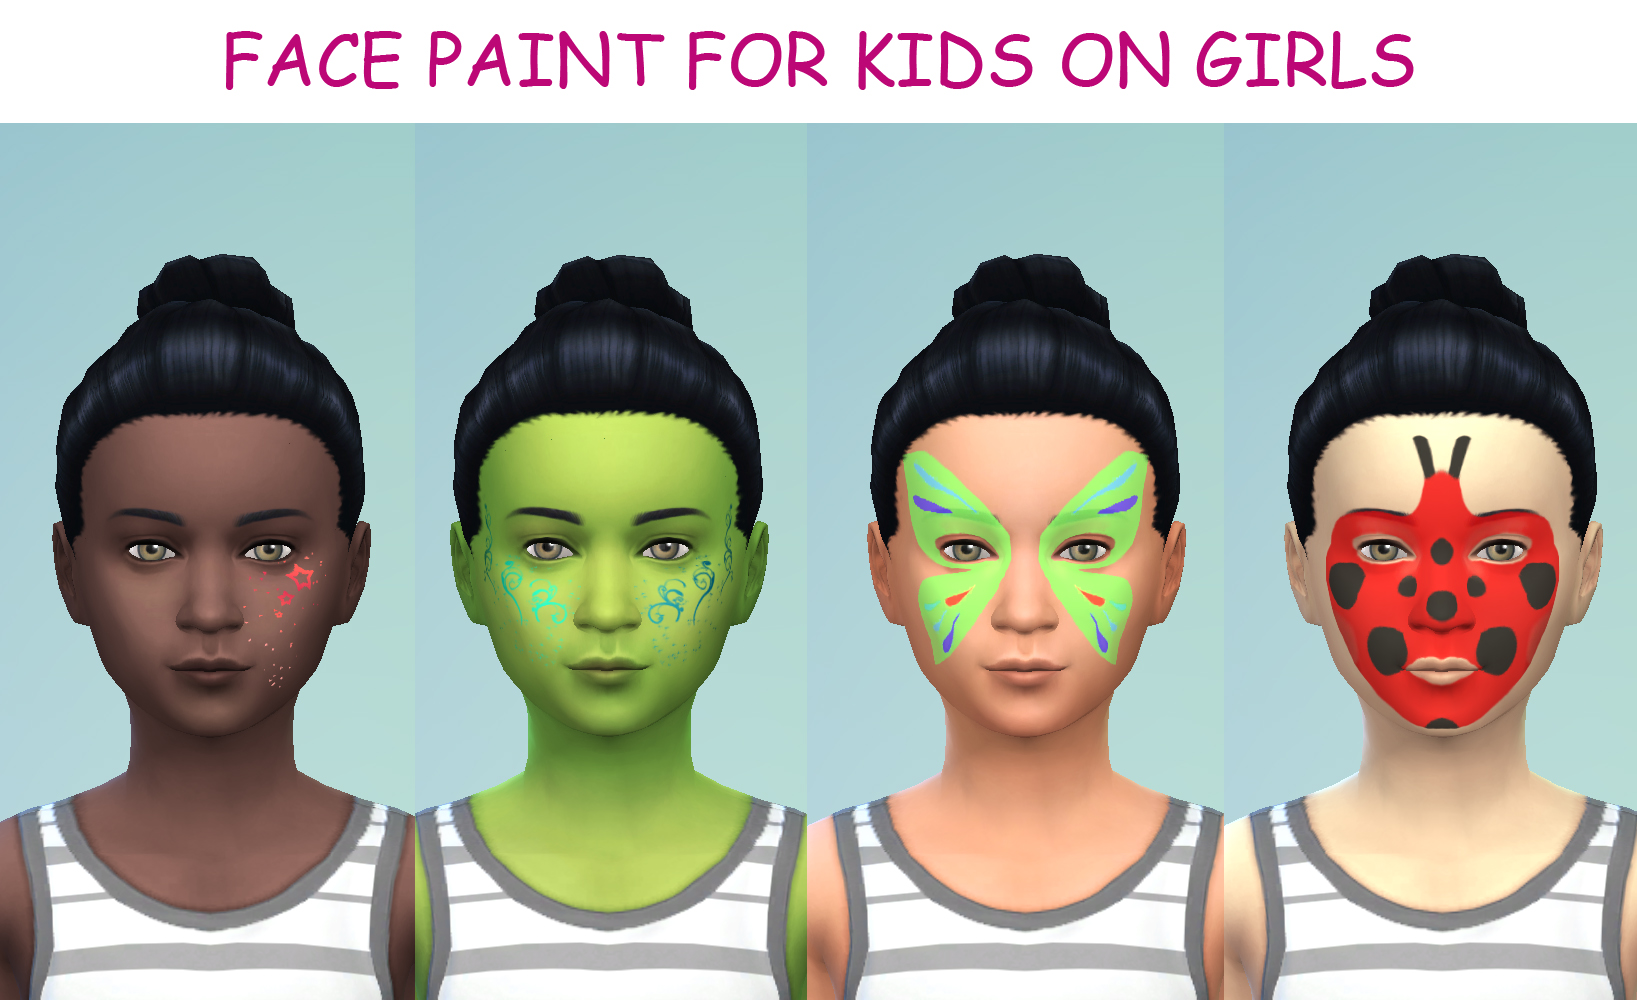 Sims 4 mods sim child. Фейс симс 4. Симс 4 макияж для детей. Маска симс 4. Грим симс 4.